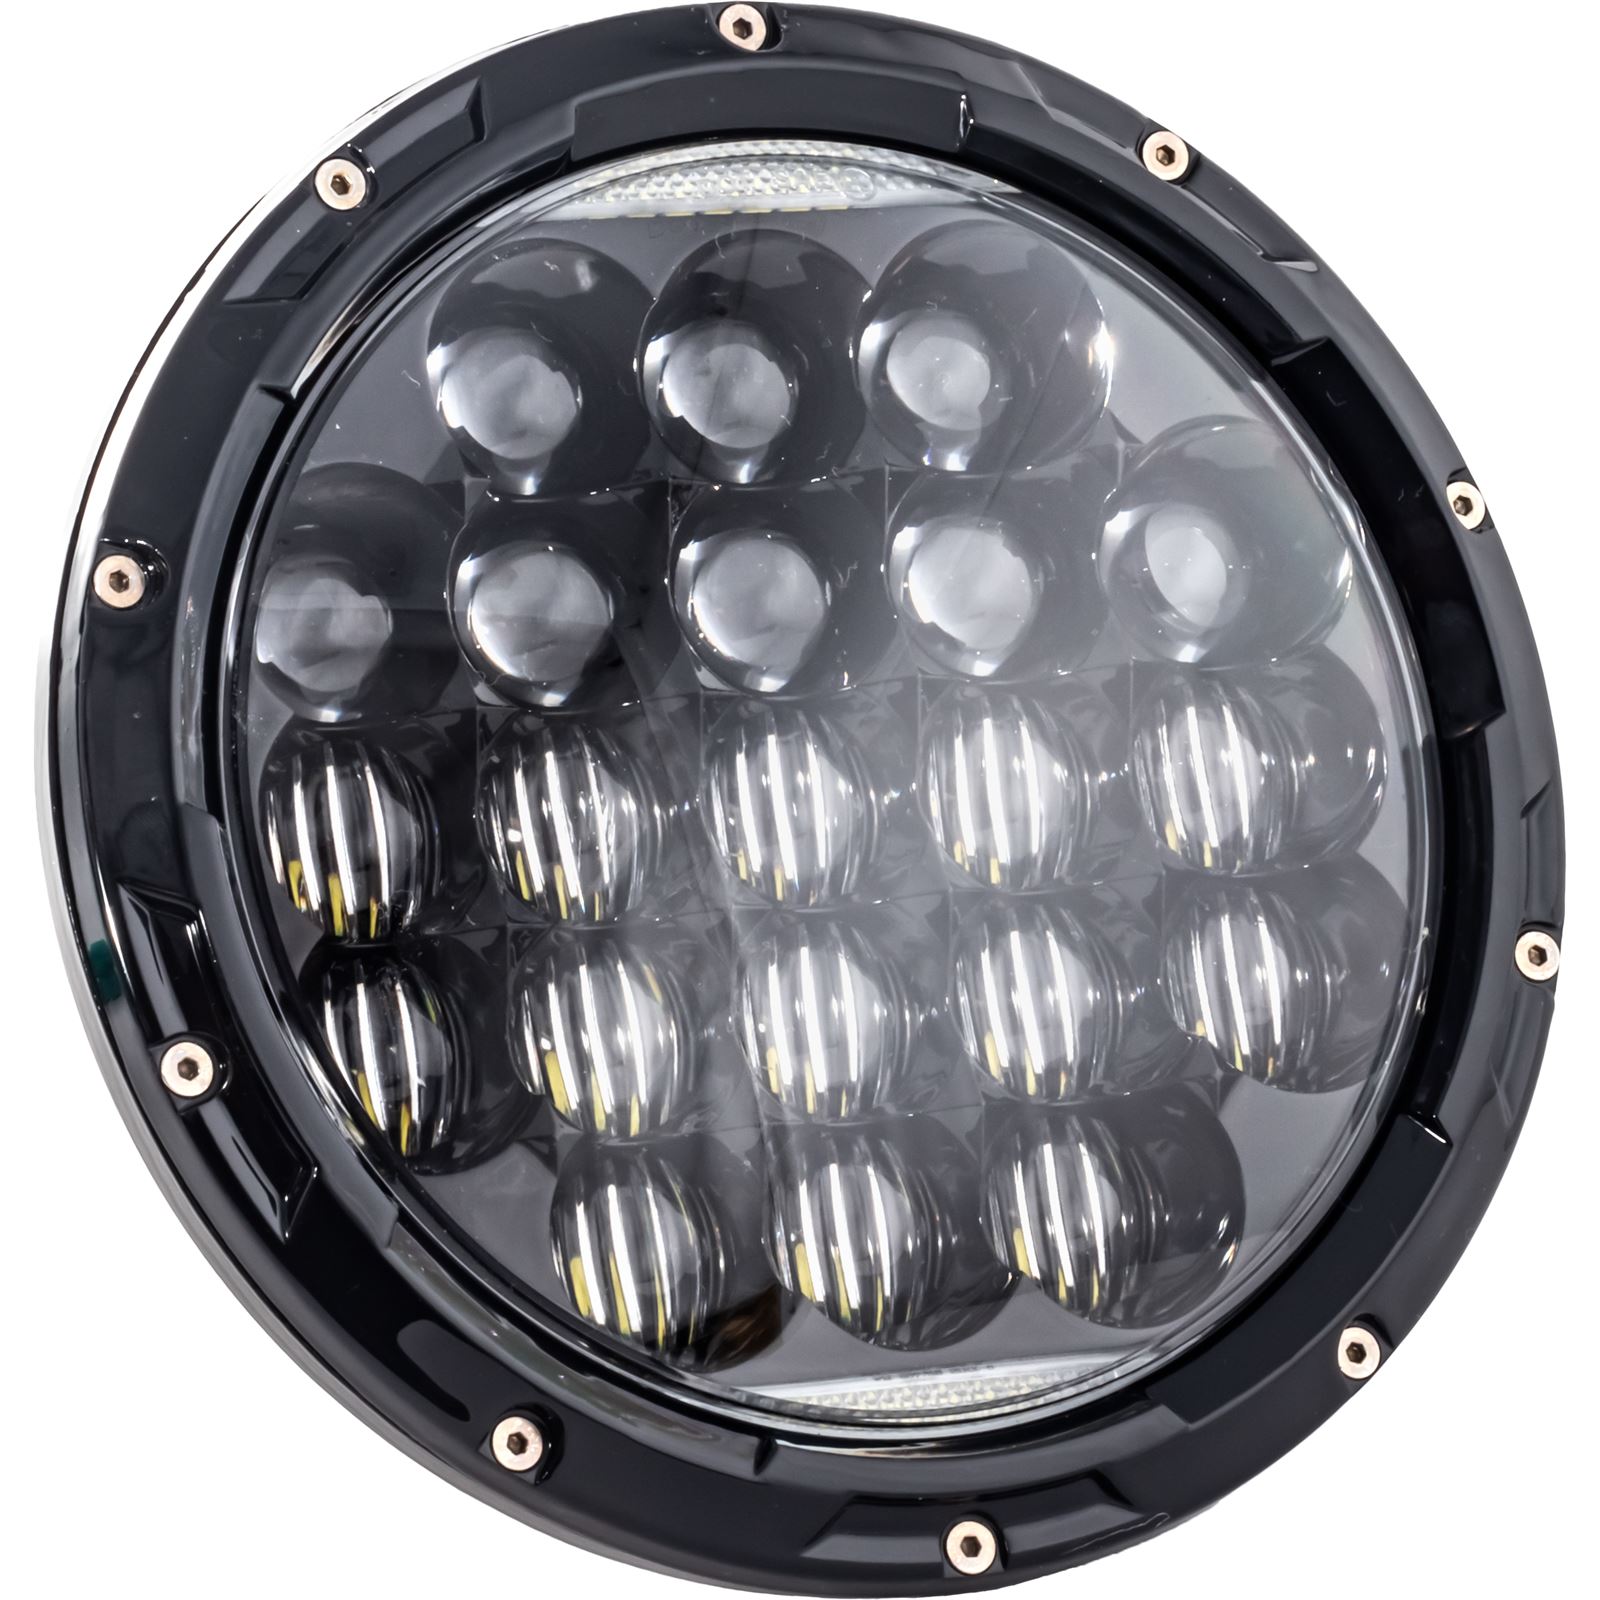 Letric Lighting Co. 7" LED Multi-Mini Headlamps for Indian - Aggressive, Black